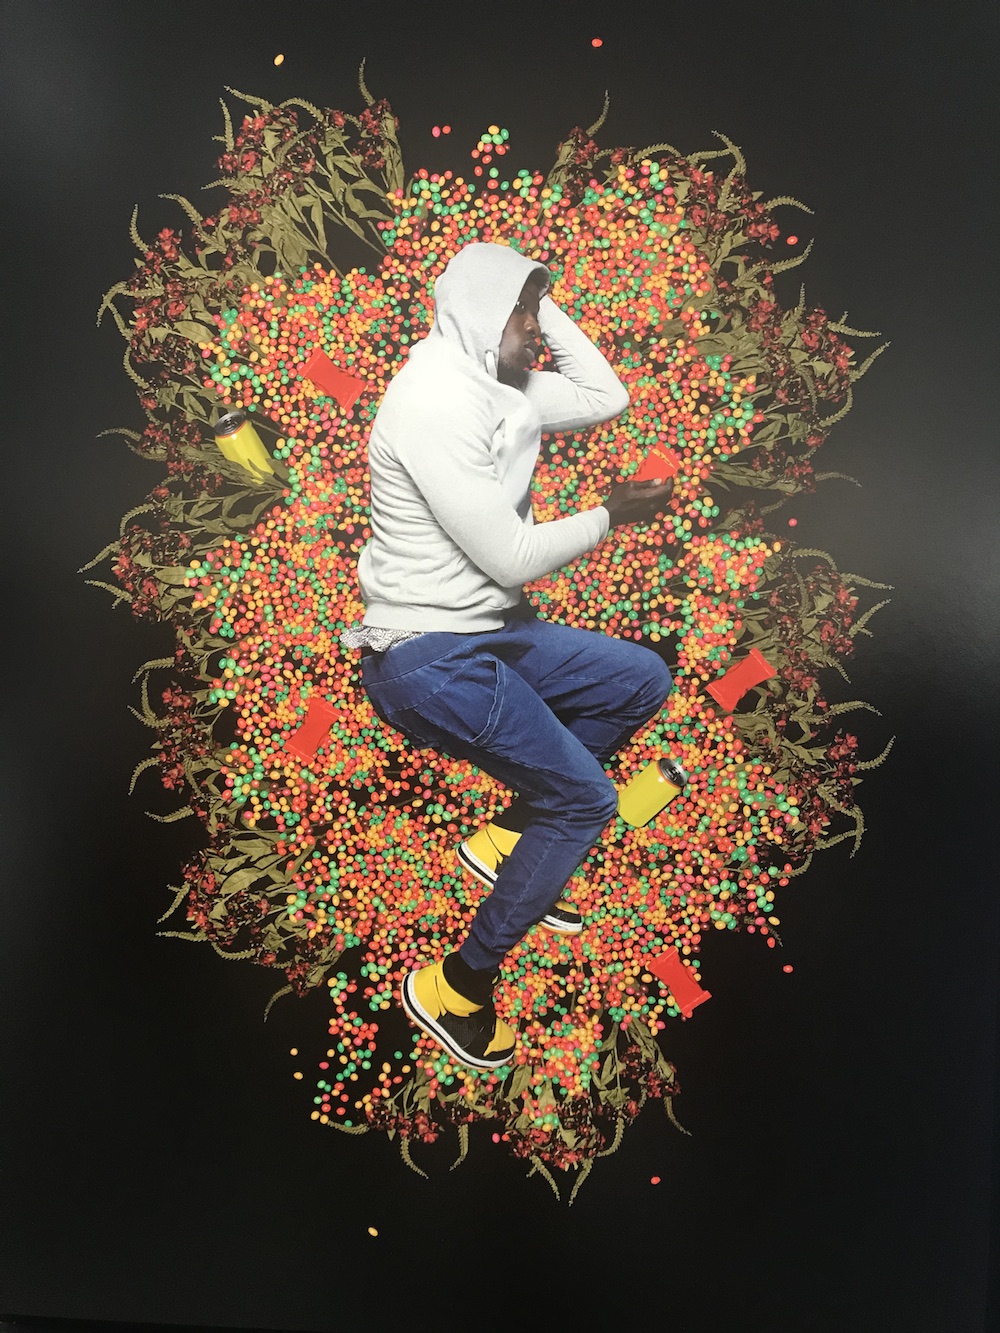 Trayvon Martin 2012, Omar Victor Diop, Liberty series